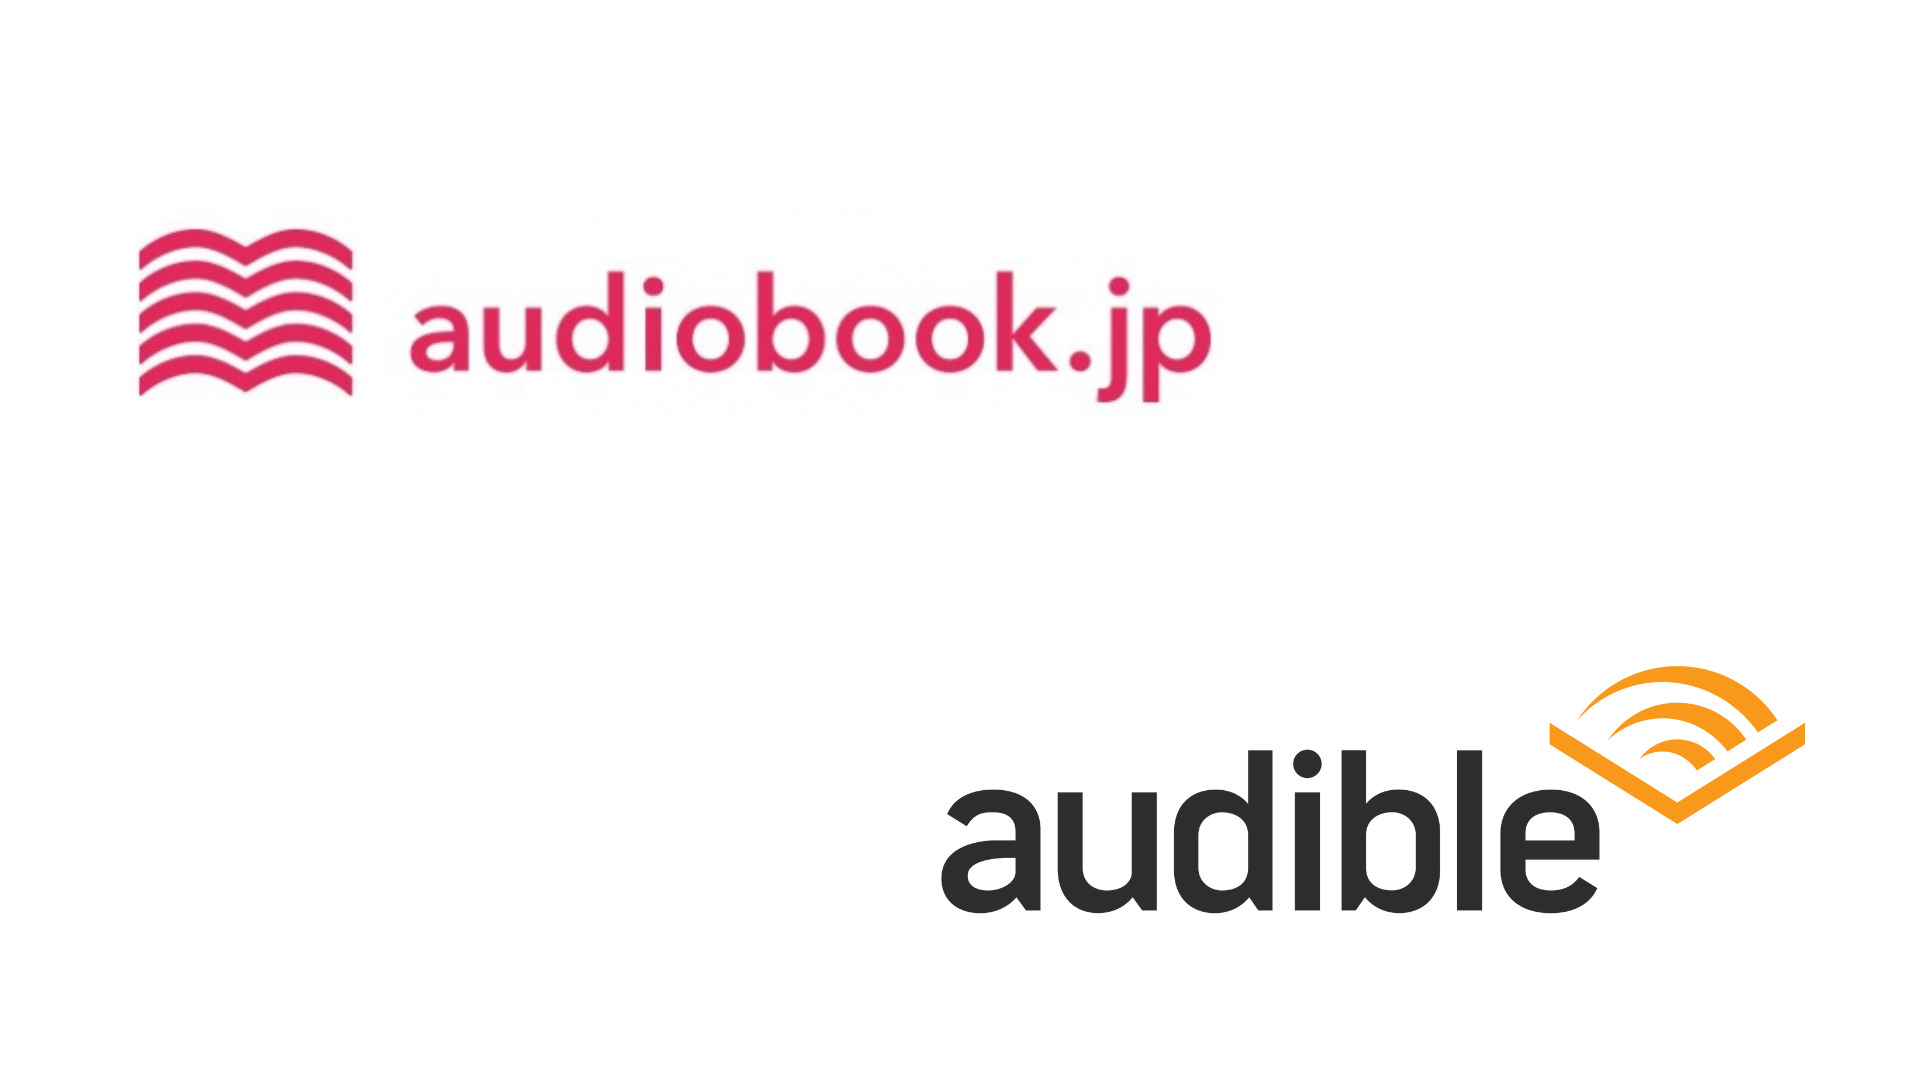 audiobook.jp Audible